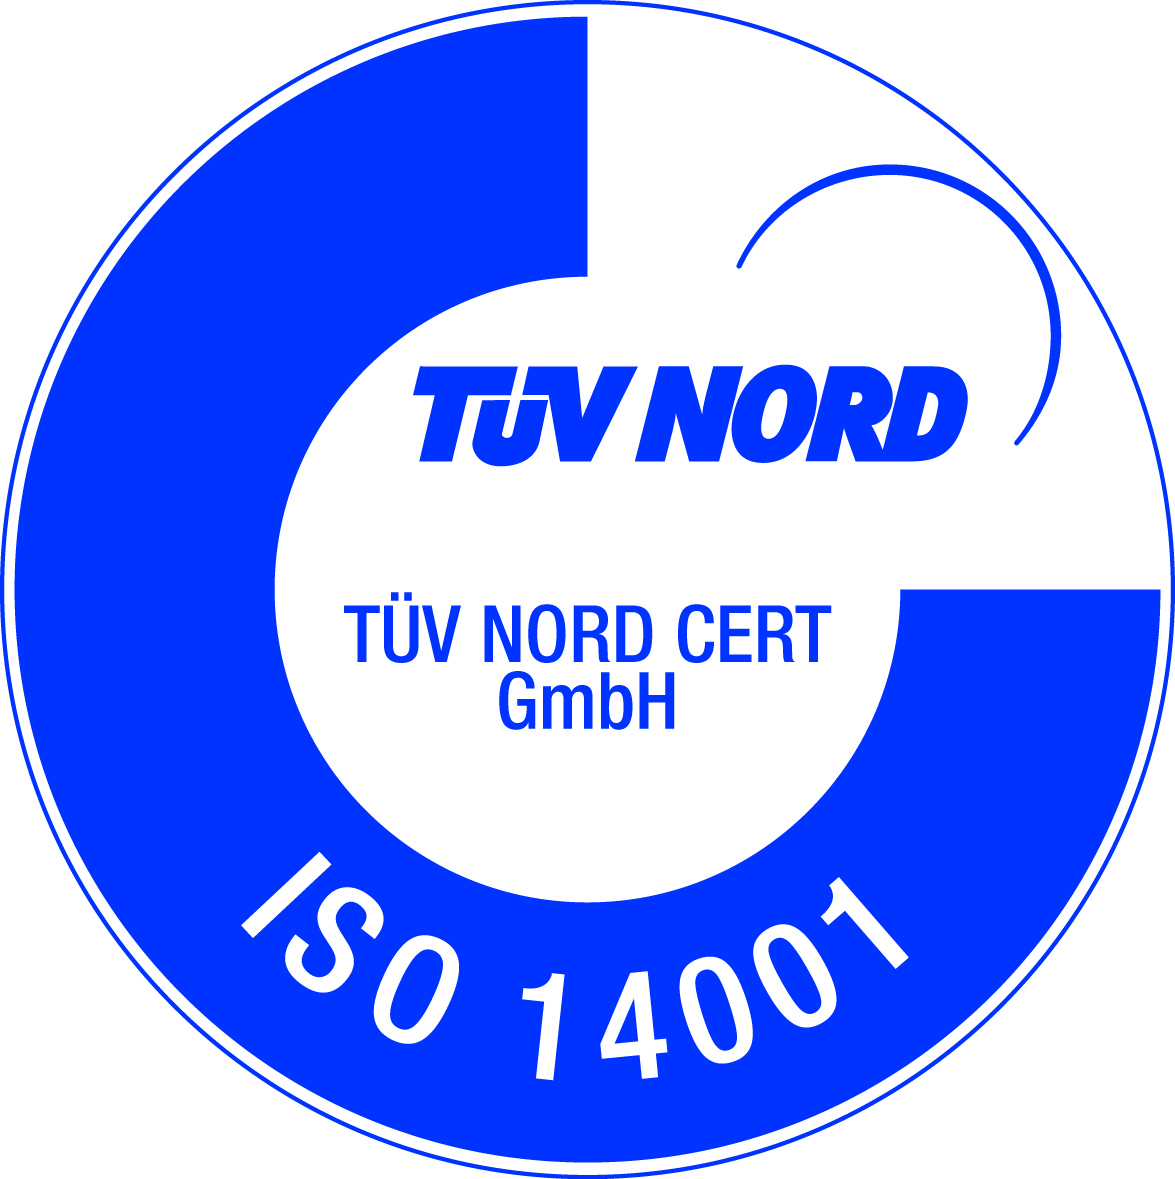 ISO 14001 LOGO